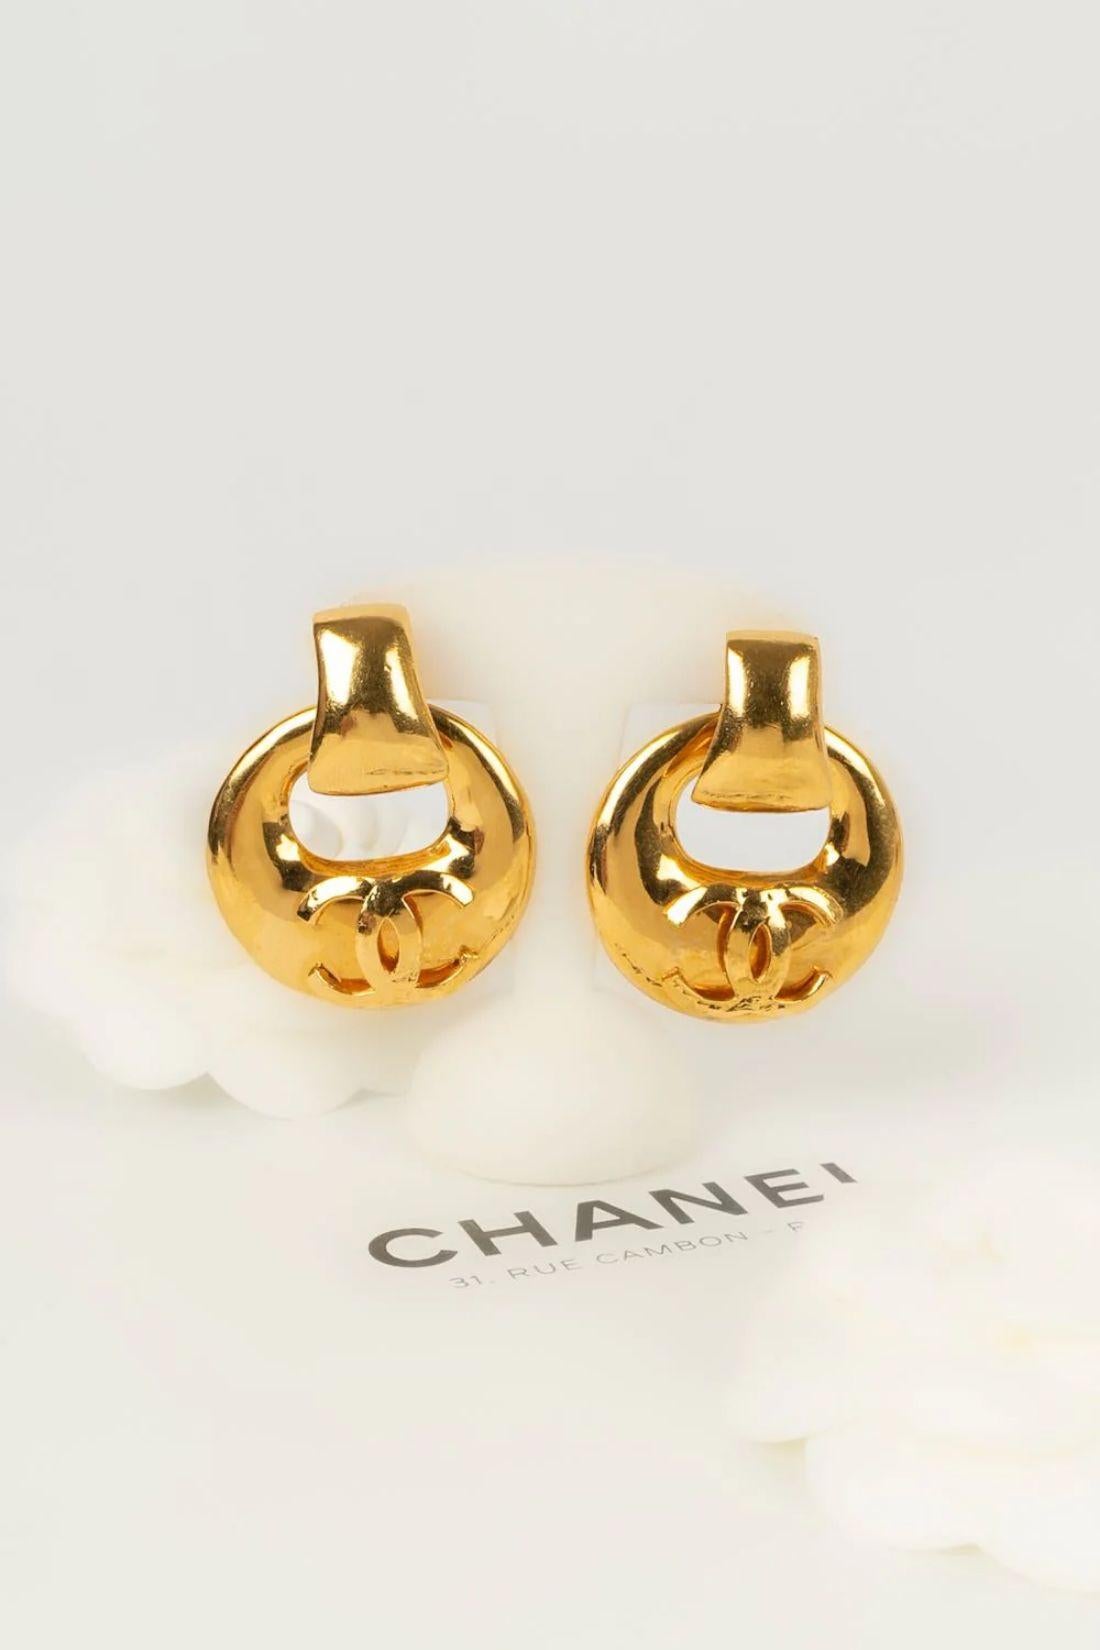 Chanel Earrings Clips in Gold Metal For Sale 4